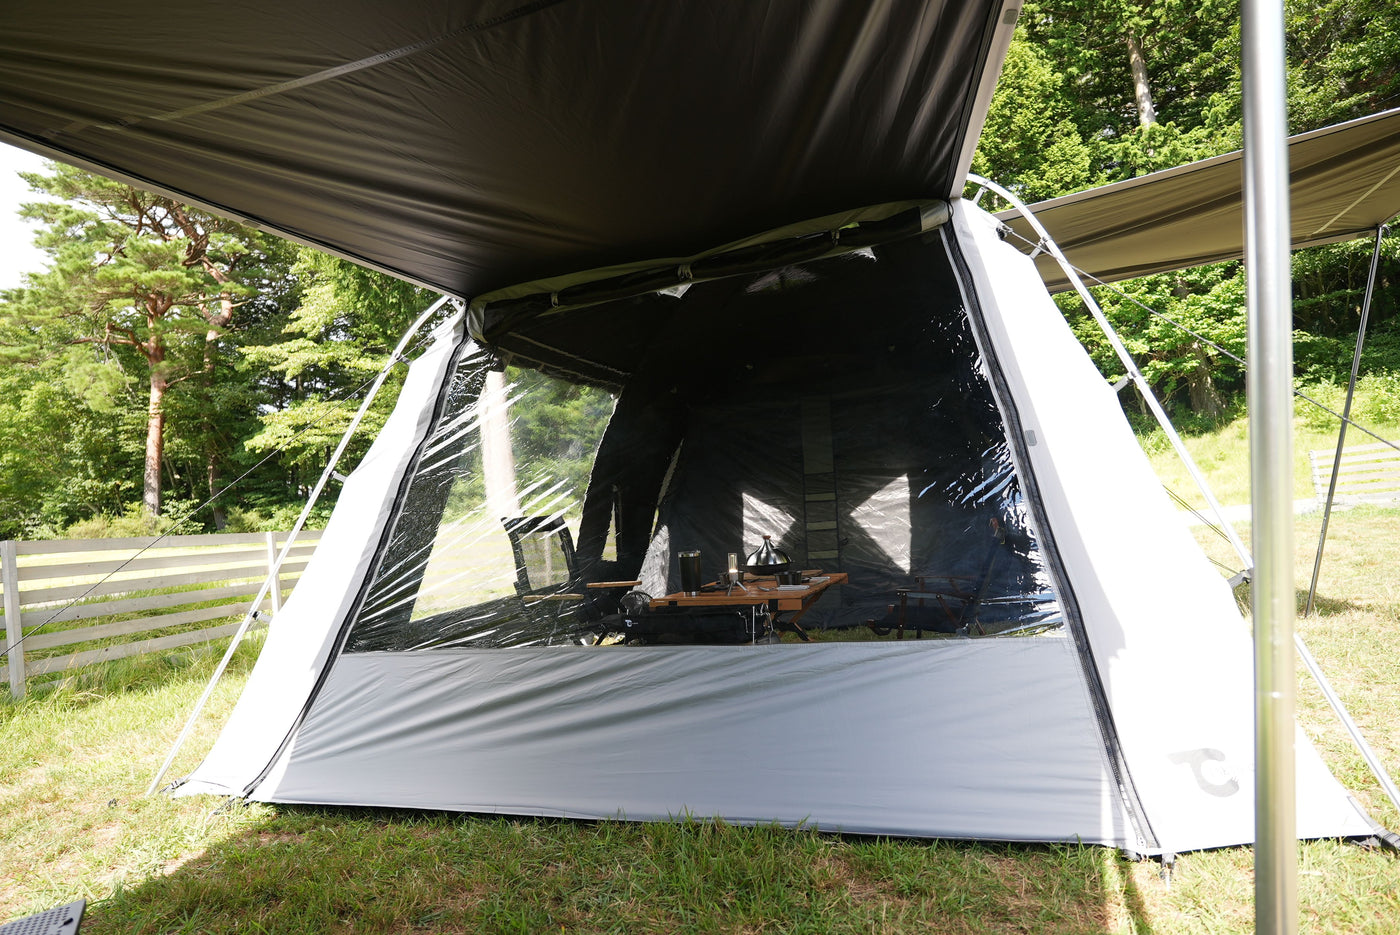 Serenity 2 Room Tent TPU Window Set/Front &amp; Rear